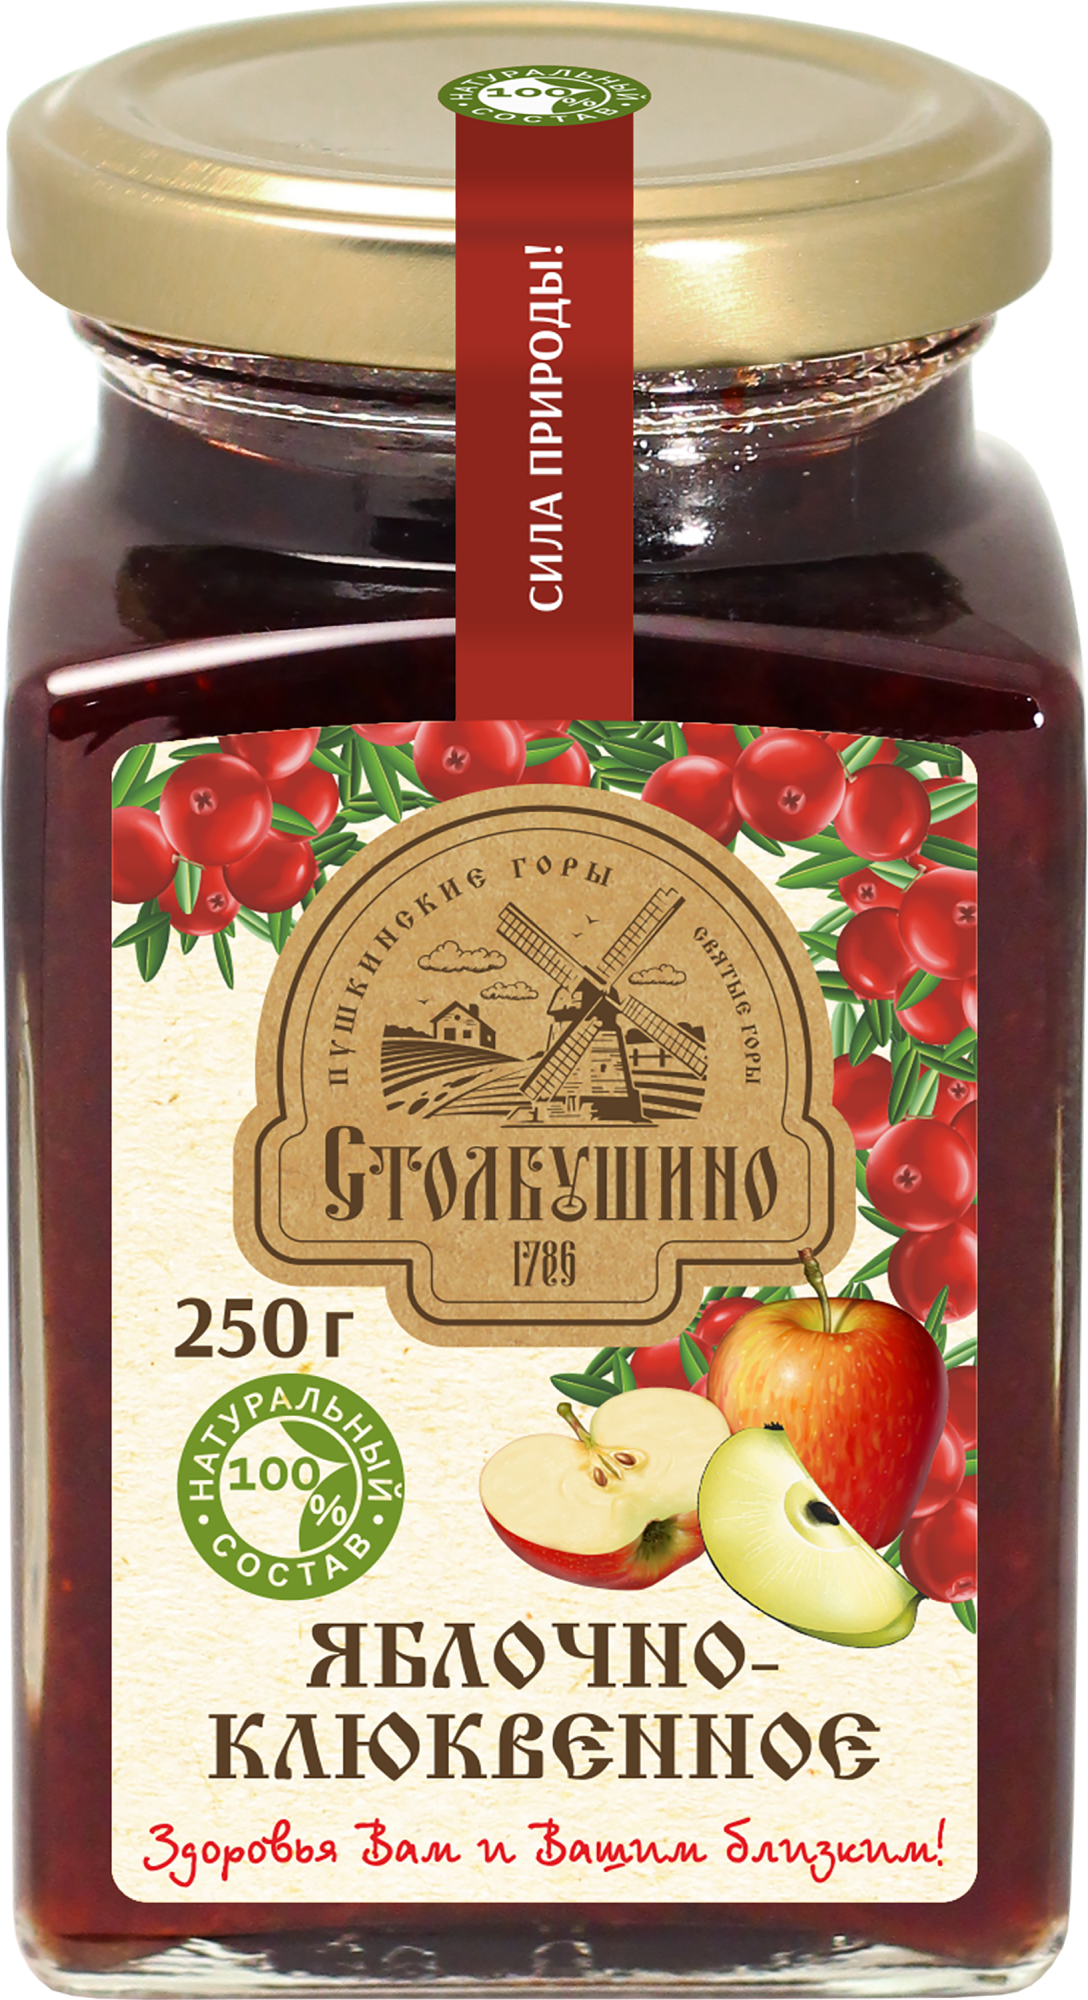 Stolbushinsky sterilisierte Apfel-Cranberry-Konfitüre